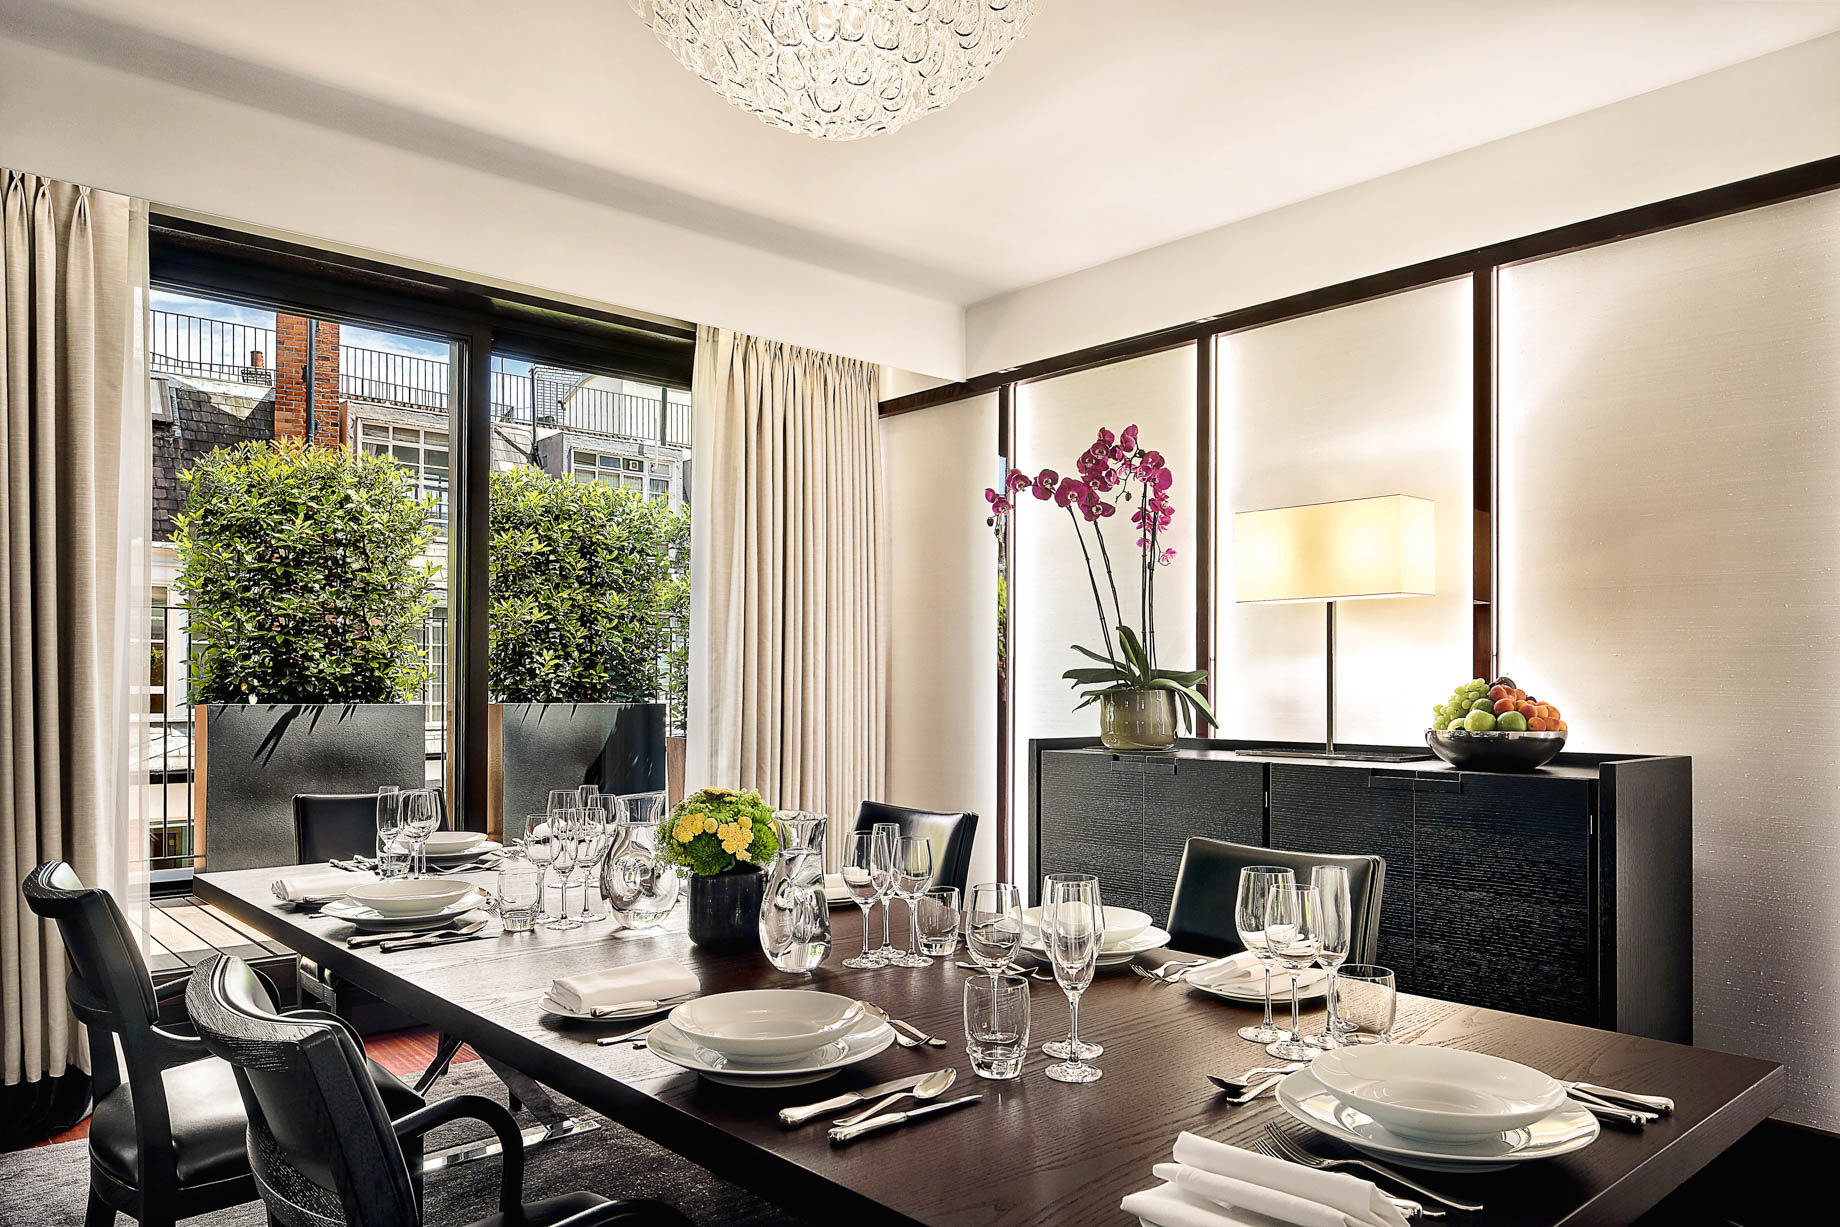 Bvlgari Hotel London – Knightsbridge, London, UK – Bvlgari Suite Dining Room